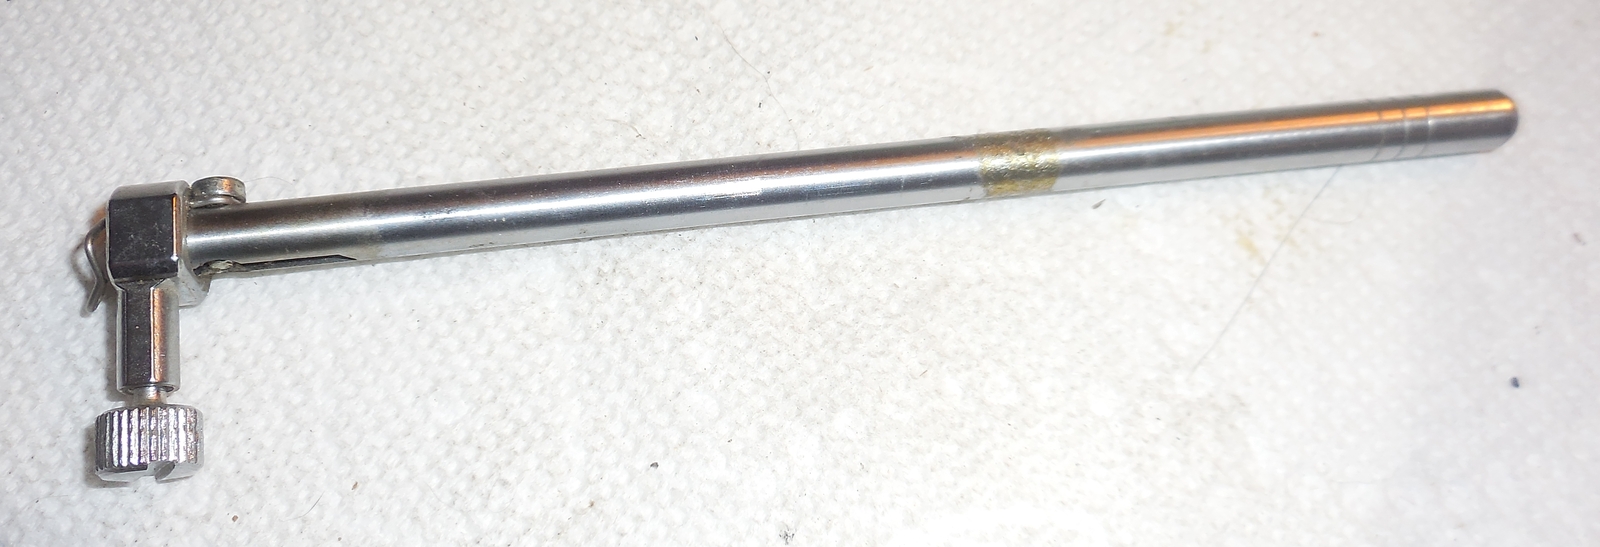 Singer Free Arm Model 57815C Needle Clamp #357429 w/Thread Guide, Screw & Bar - $20.00